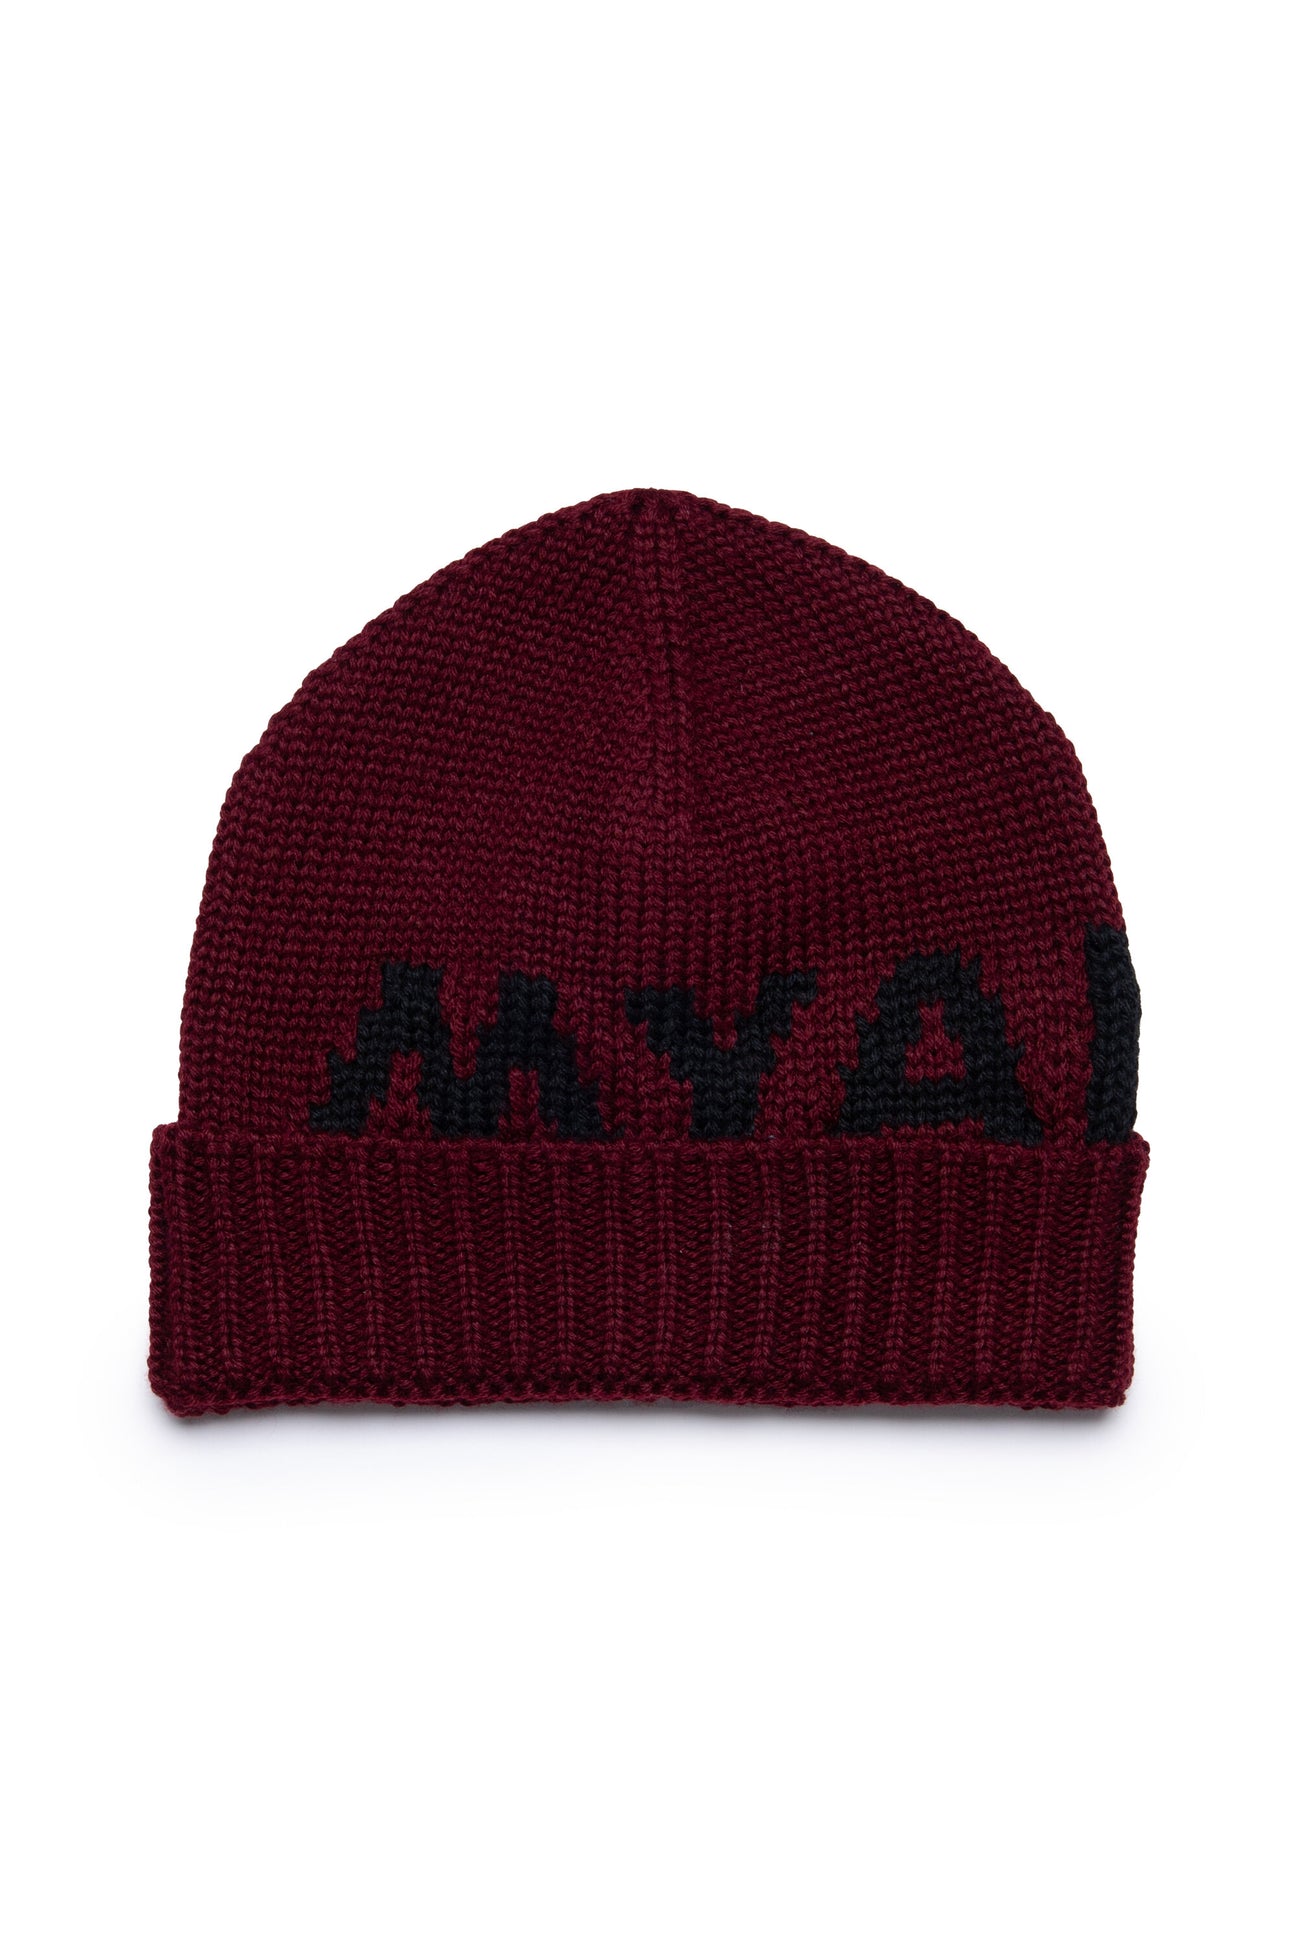 Beanie hat with MYAR logo 